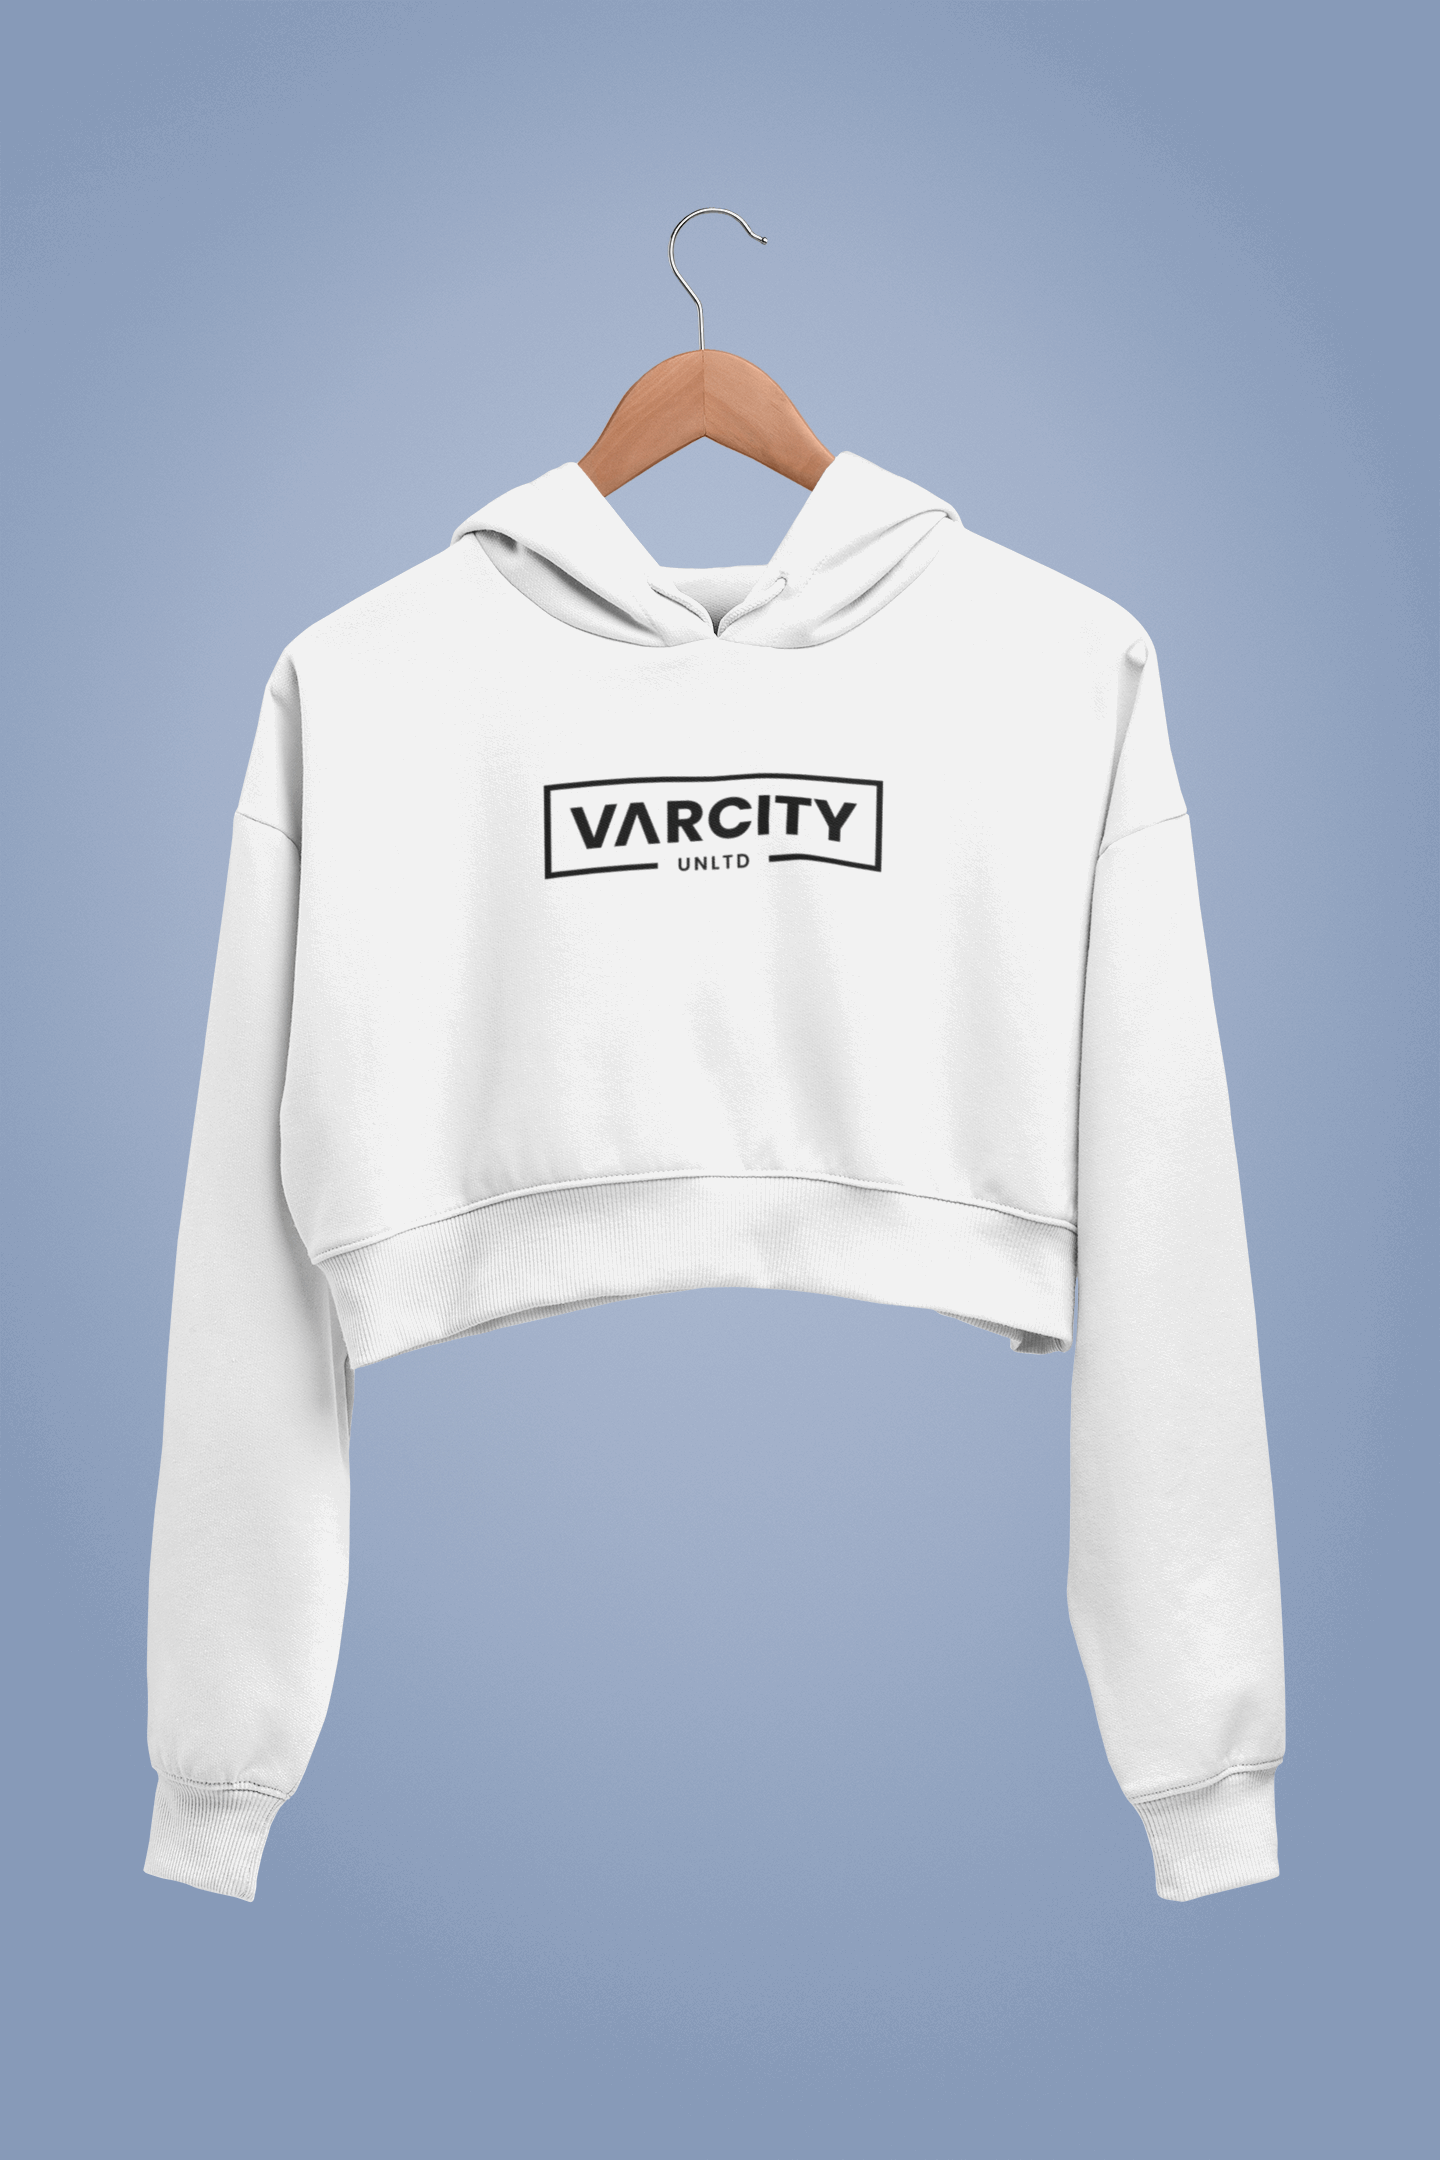 Varcity Unltd ® Ladies' Cropped Oversize Hooded Sweatshirt White